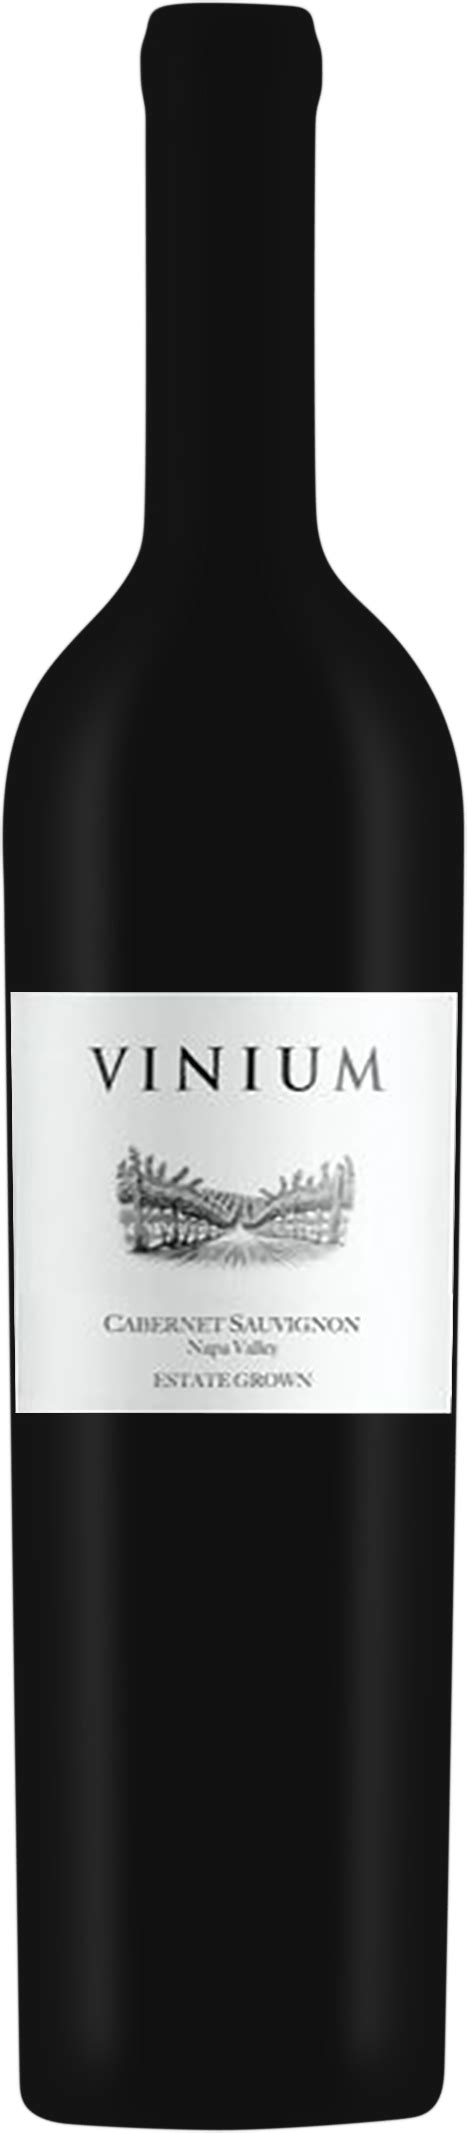 2016 Vinium Cellars Napa Cabernet Sauvignon Wine Library